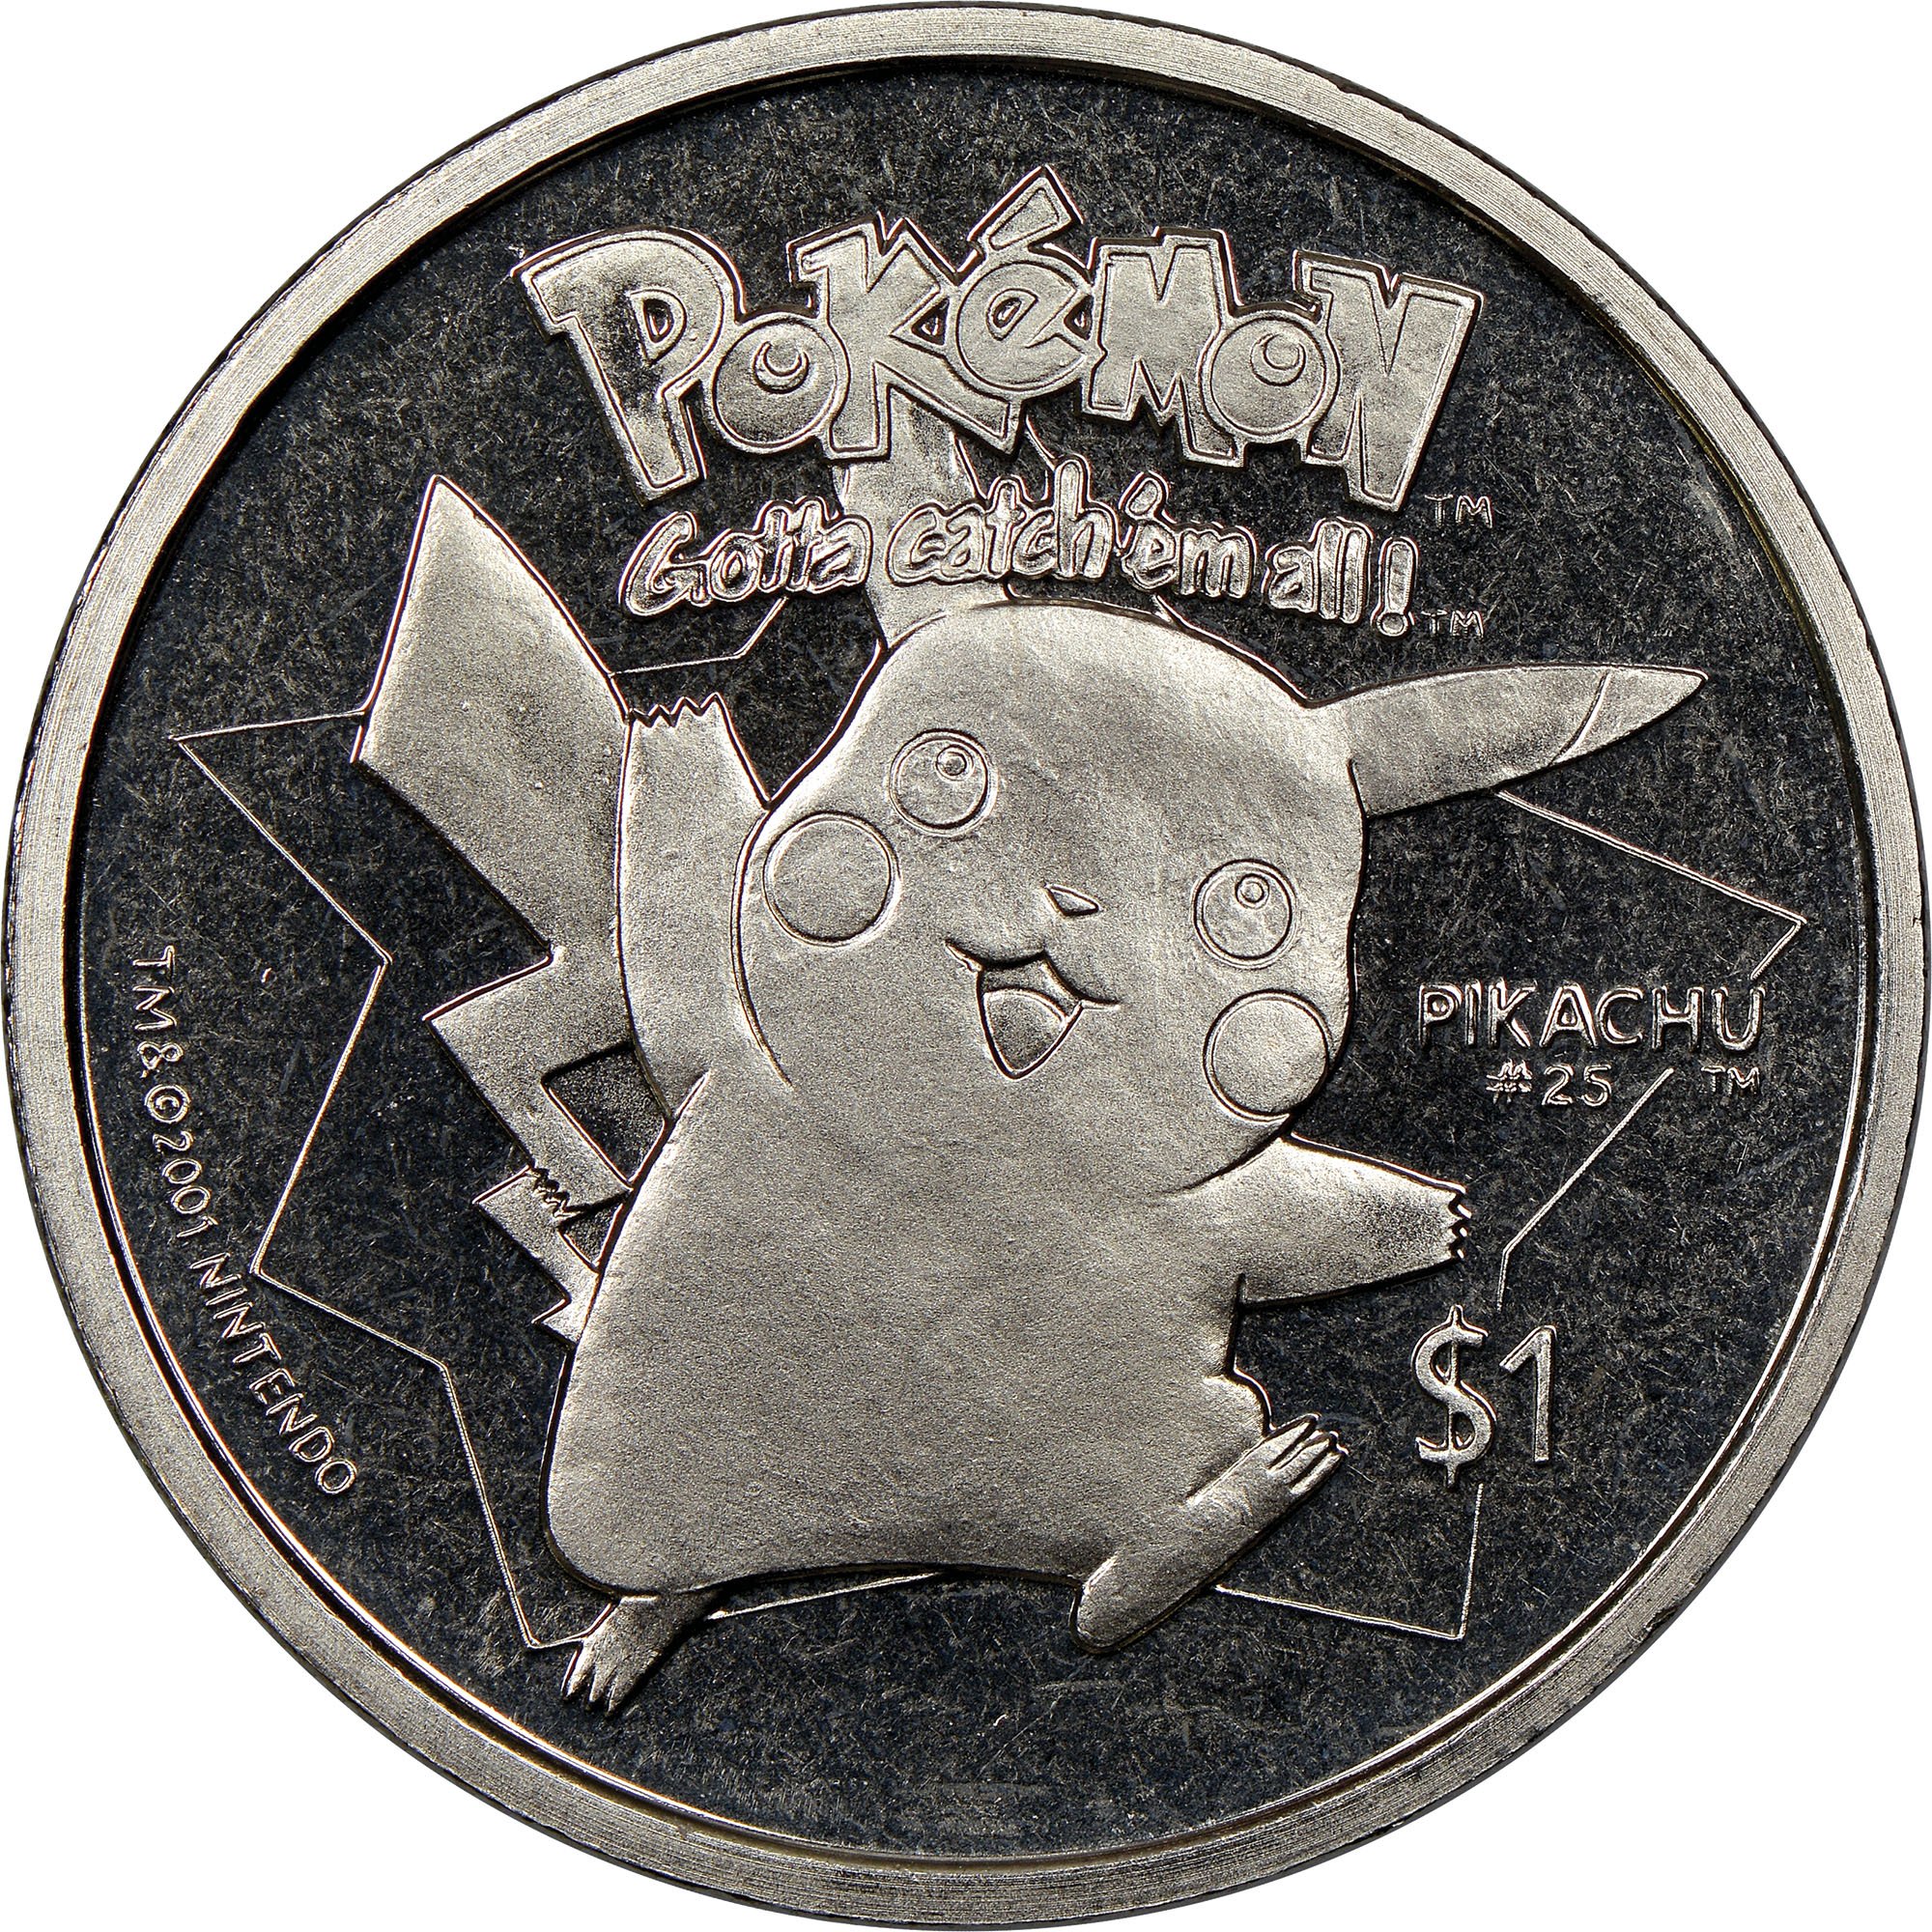 Pokémon Character Coins